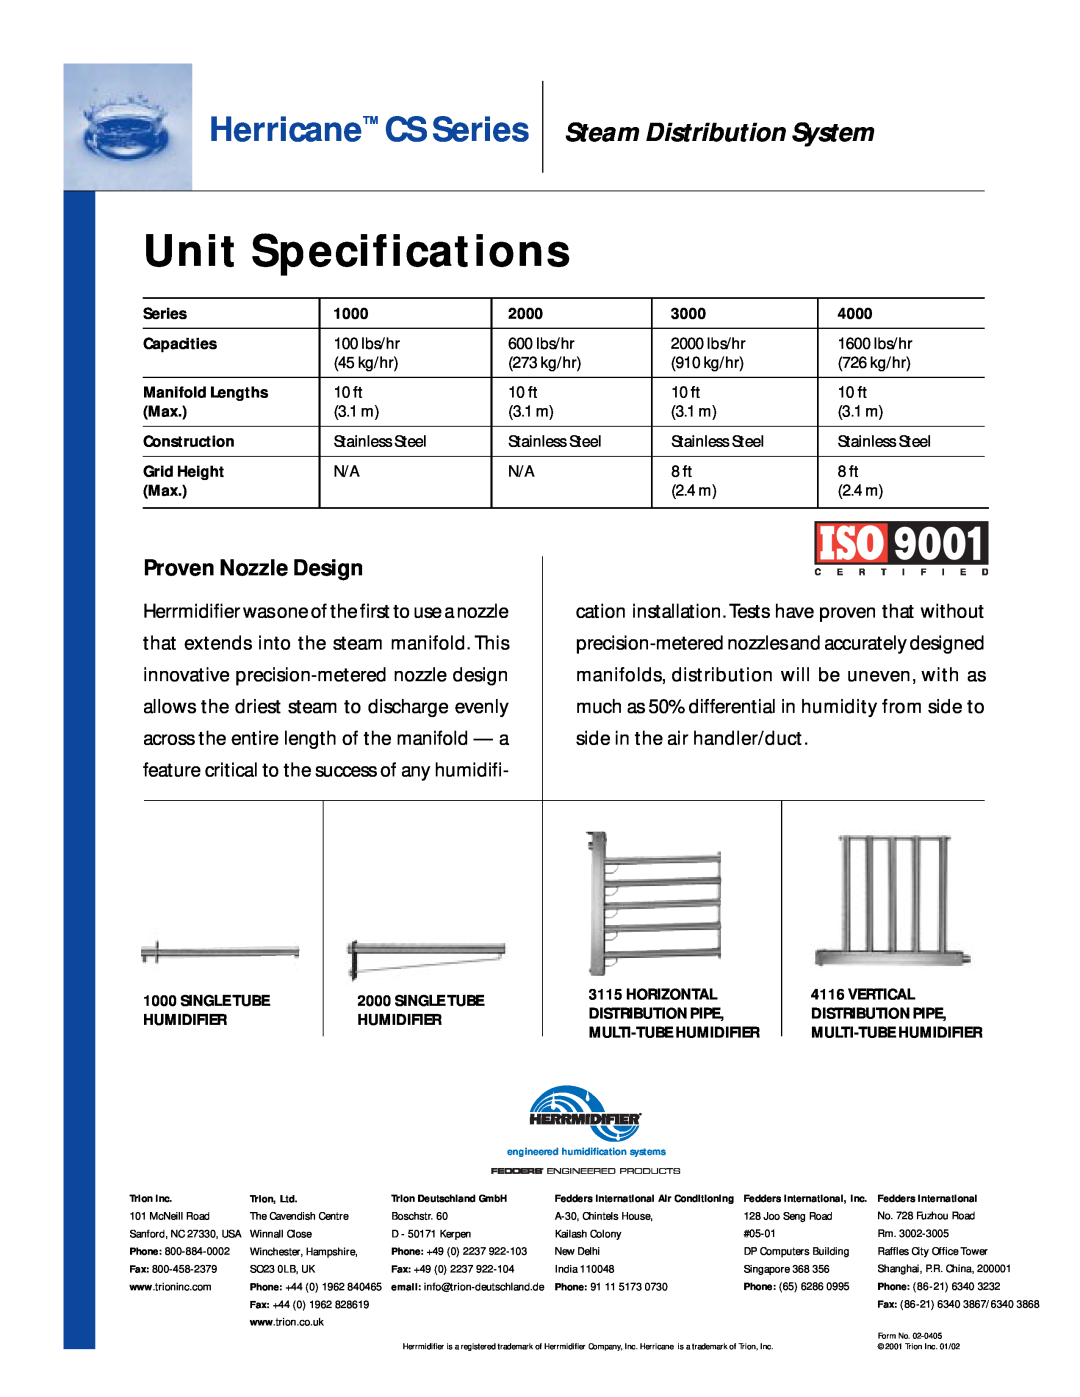 Herrmidifier Co 2000, 1000, 4000 Unit Specifications, Herricane CS Series, Steam Distribution System, Proven Nozzle Design 